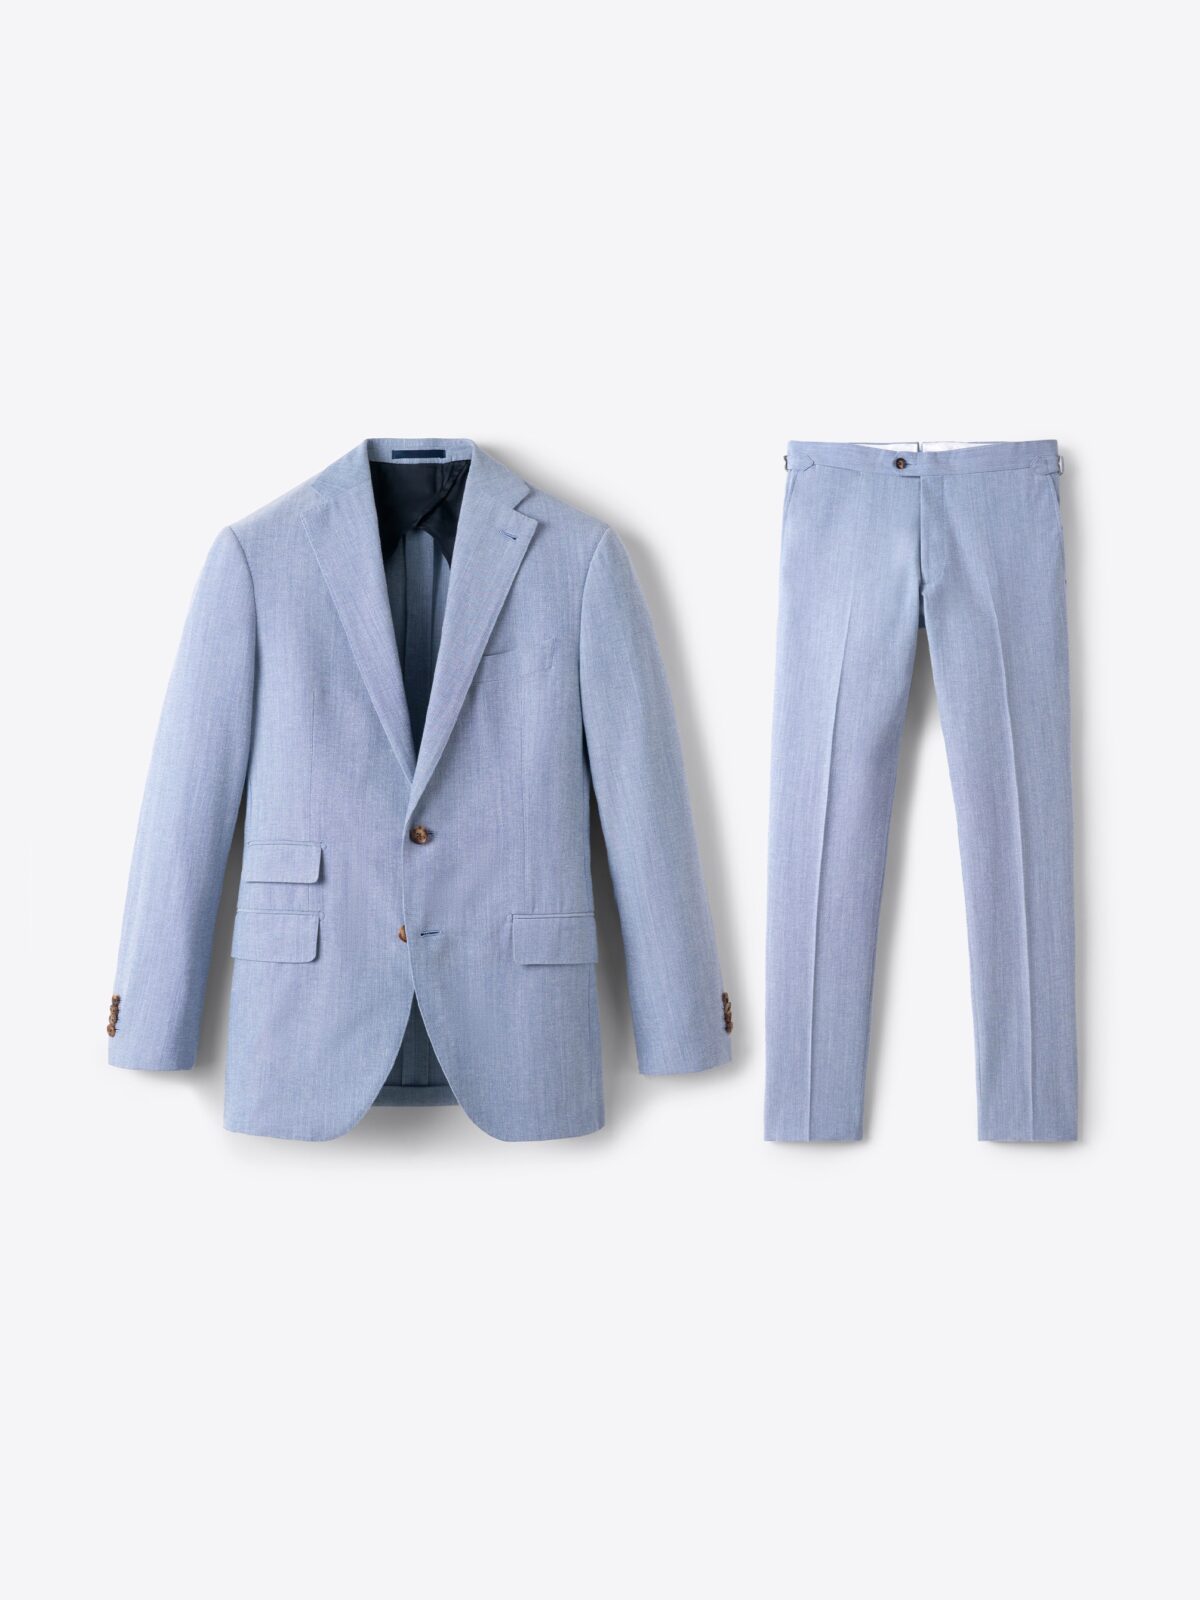 New Summer Classic: Light Blue Blazer | He Spoke Style